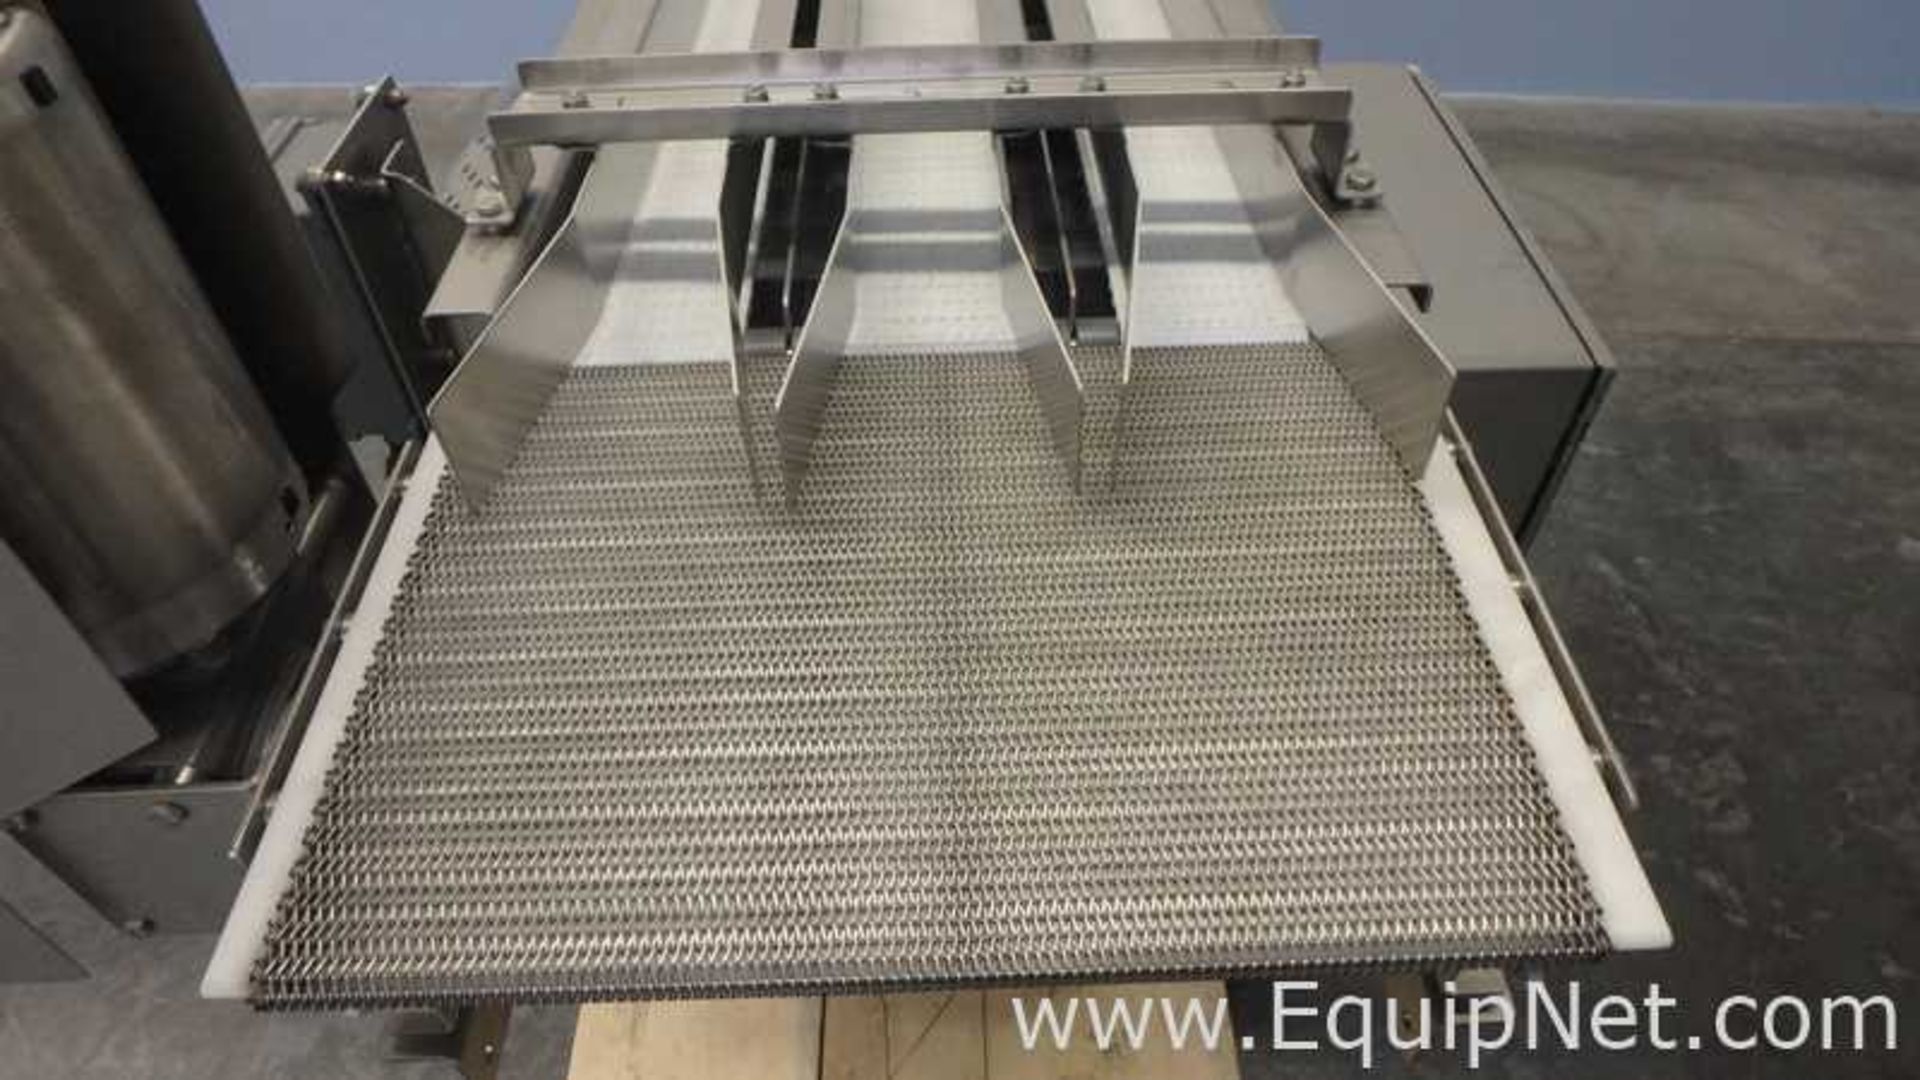 KleenLine Engineered Stainless Steel Conveyor Designed for Full Washdown - Image 18 of 30